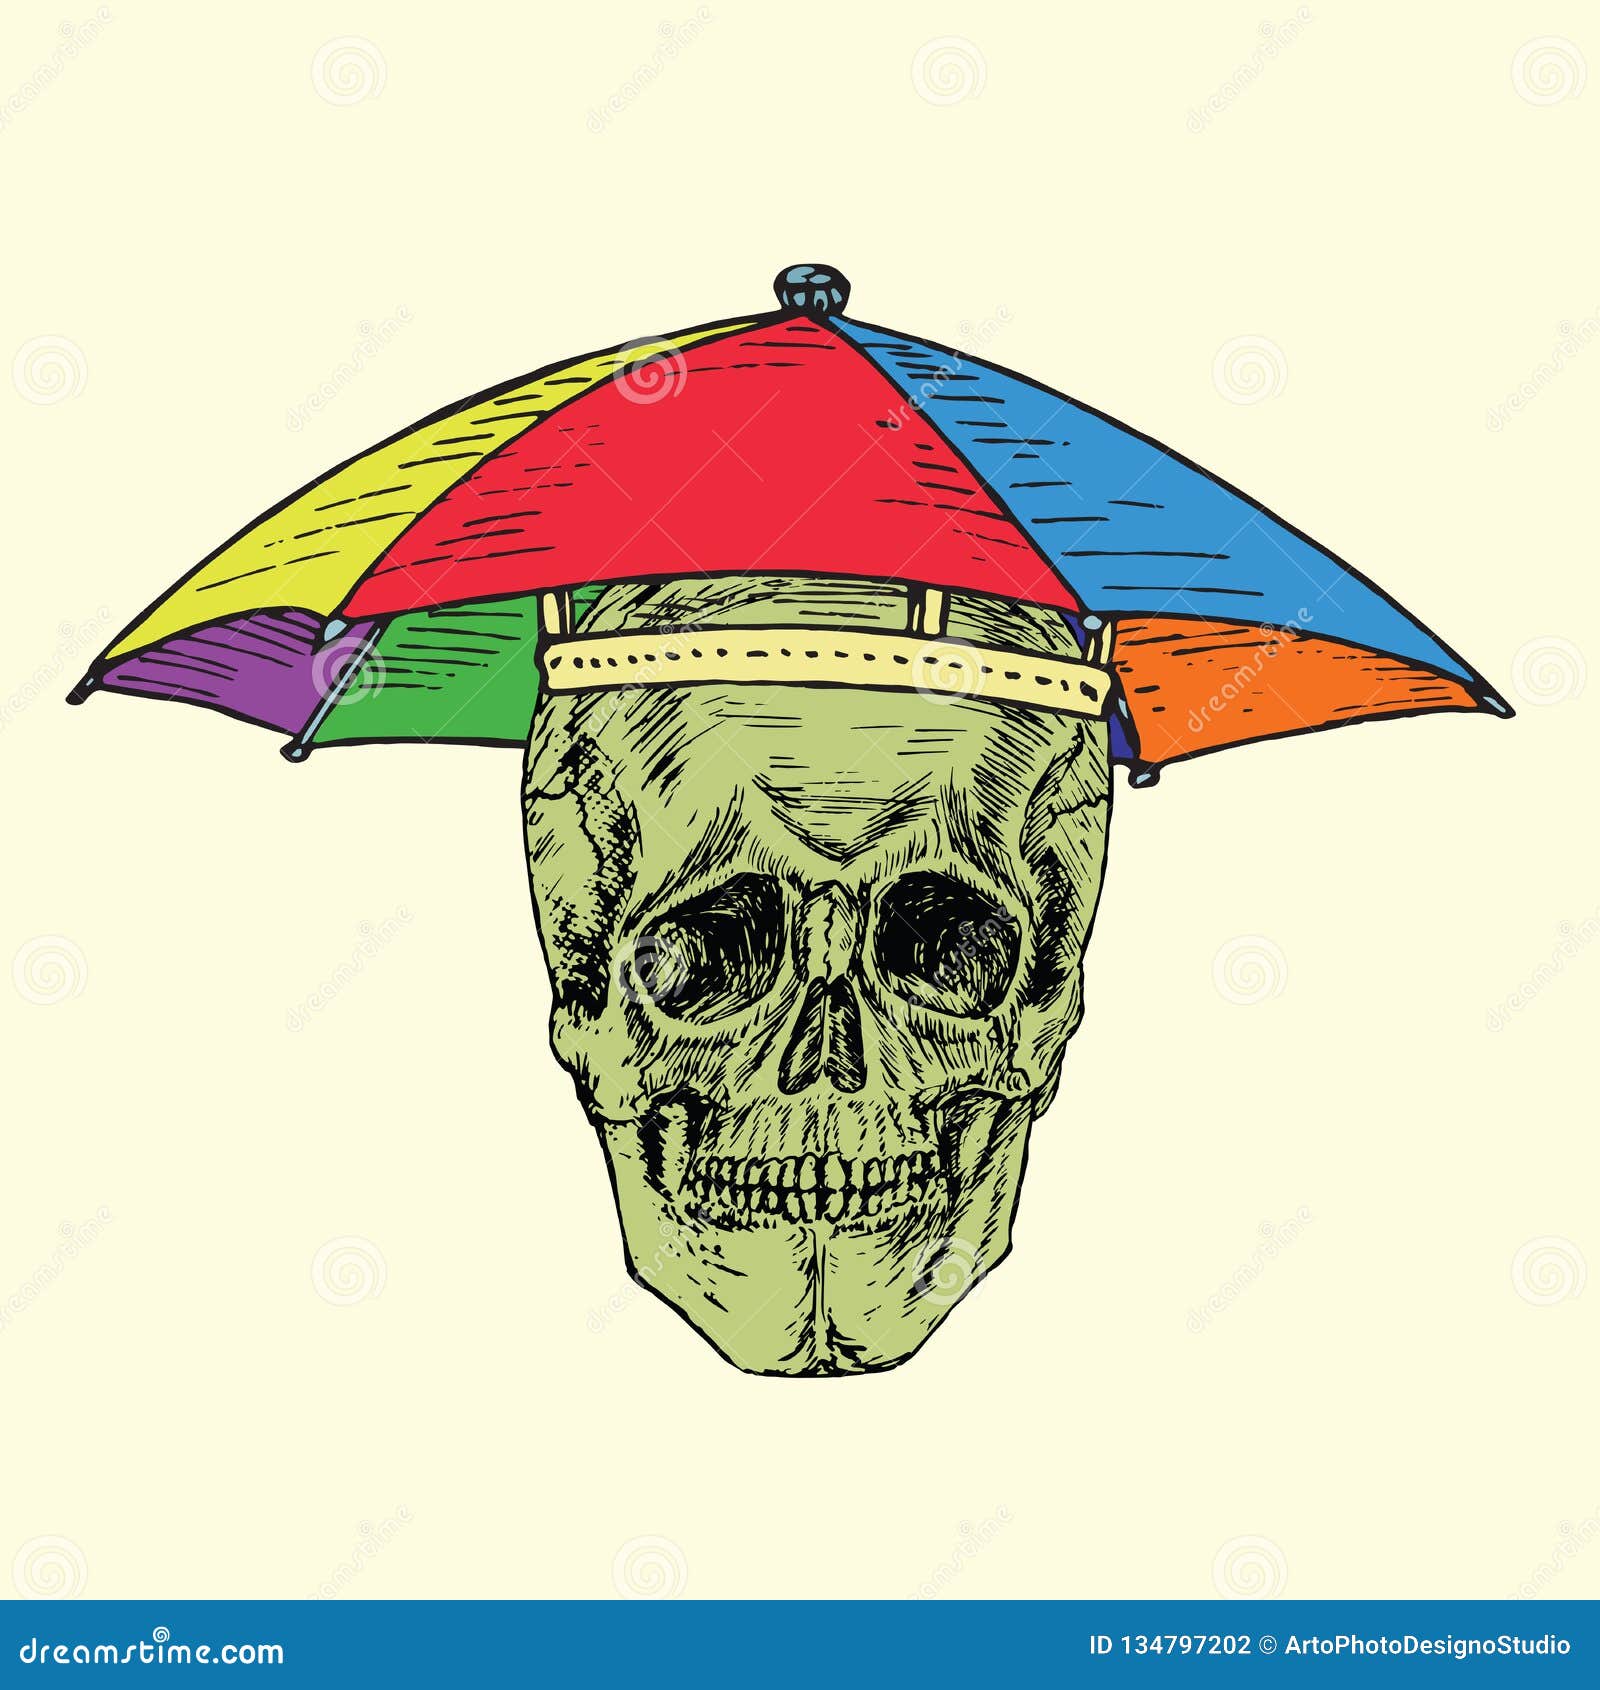 umbrella sketch transparent background  Clip Art Library